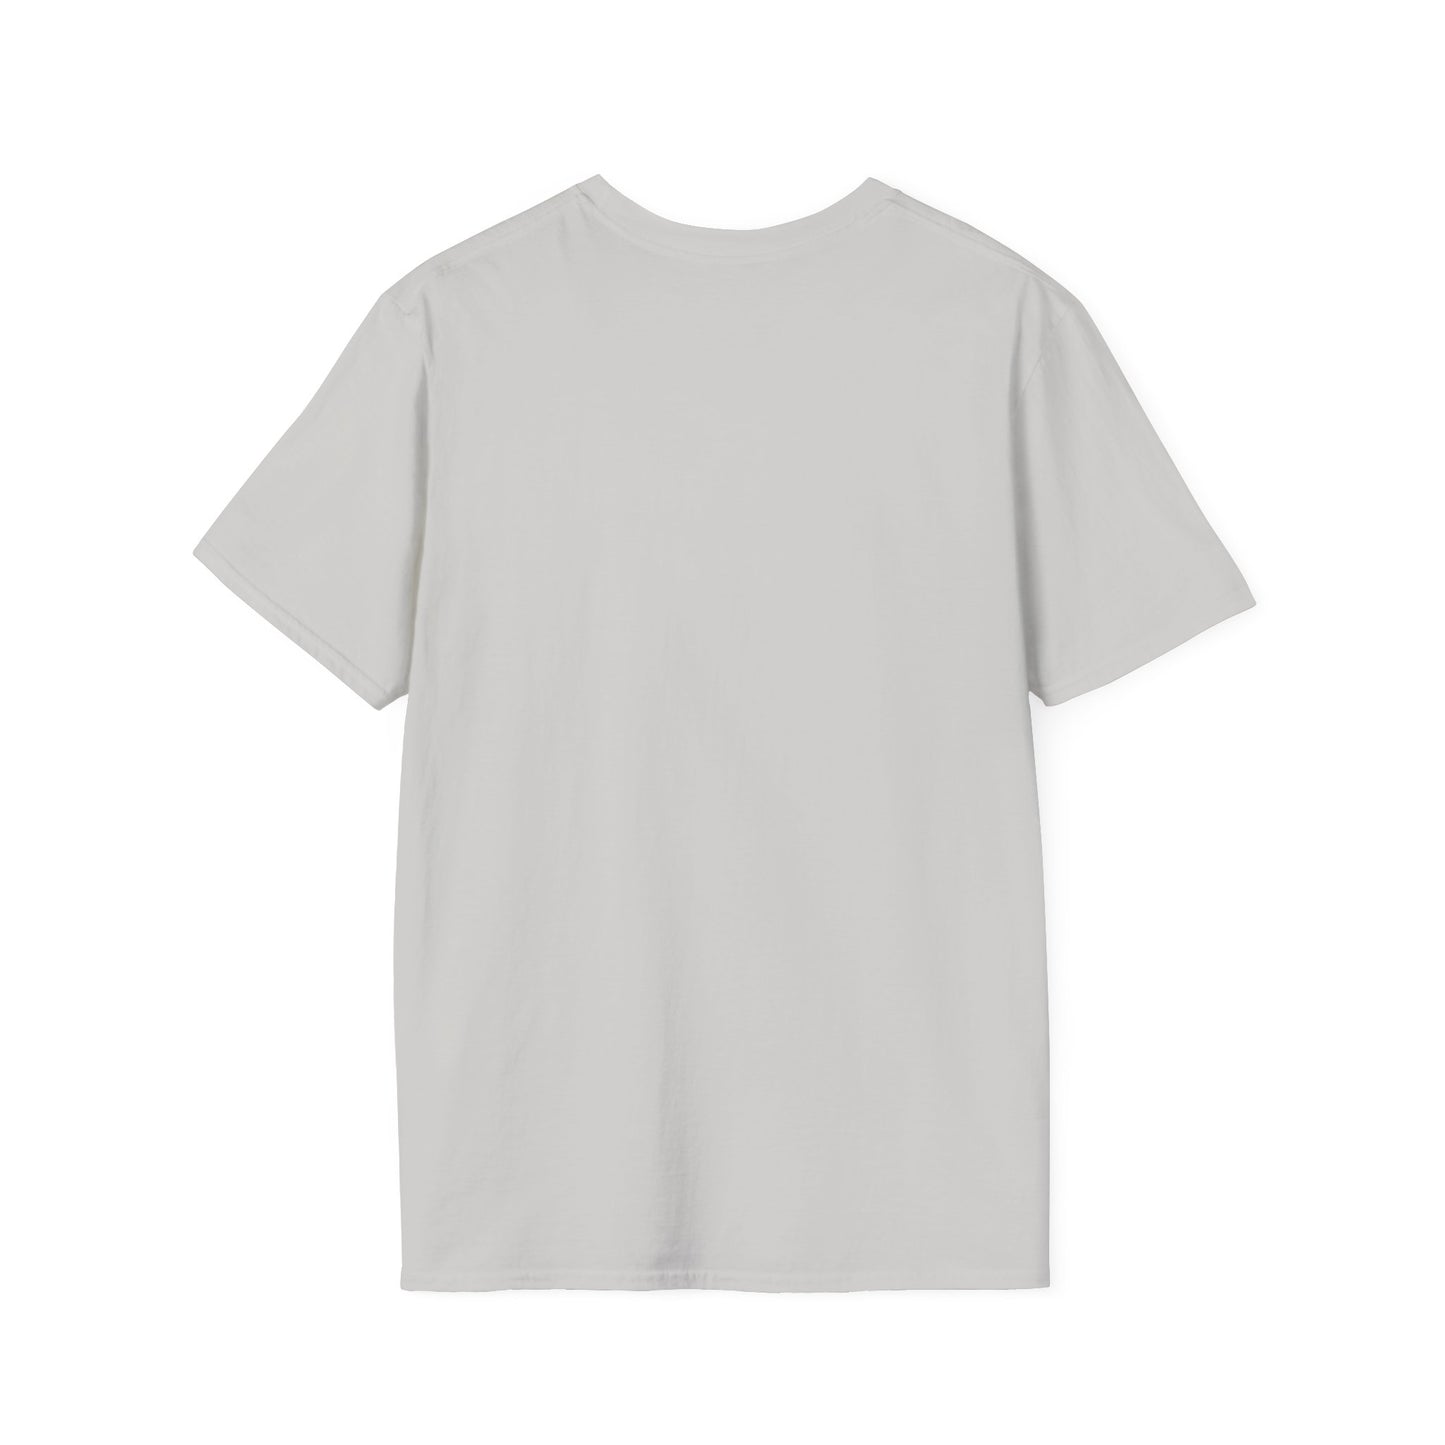 Make It Magical: "Disco Yeti" Unisex Retro T-Shirt